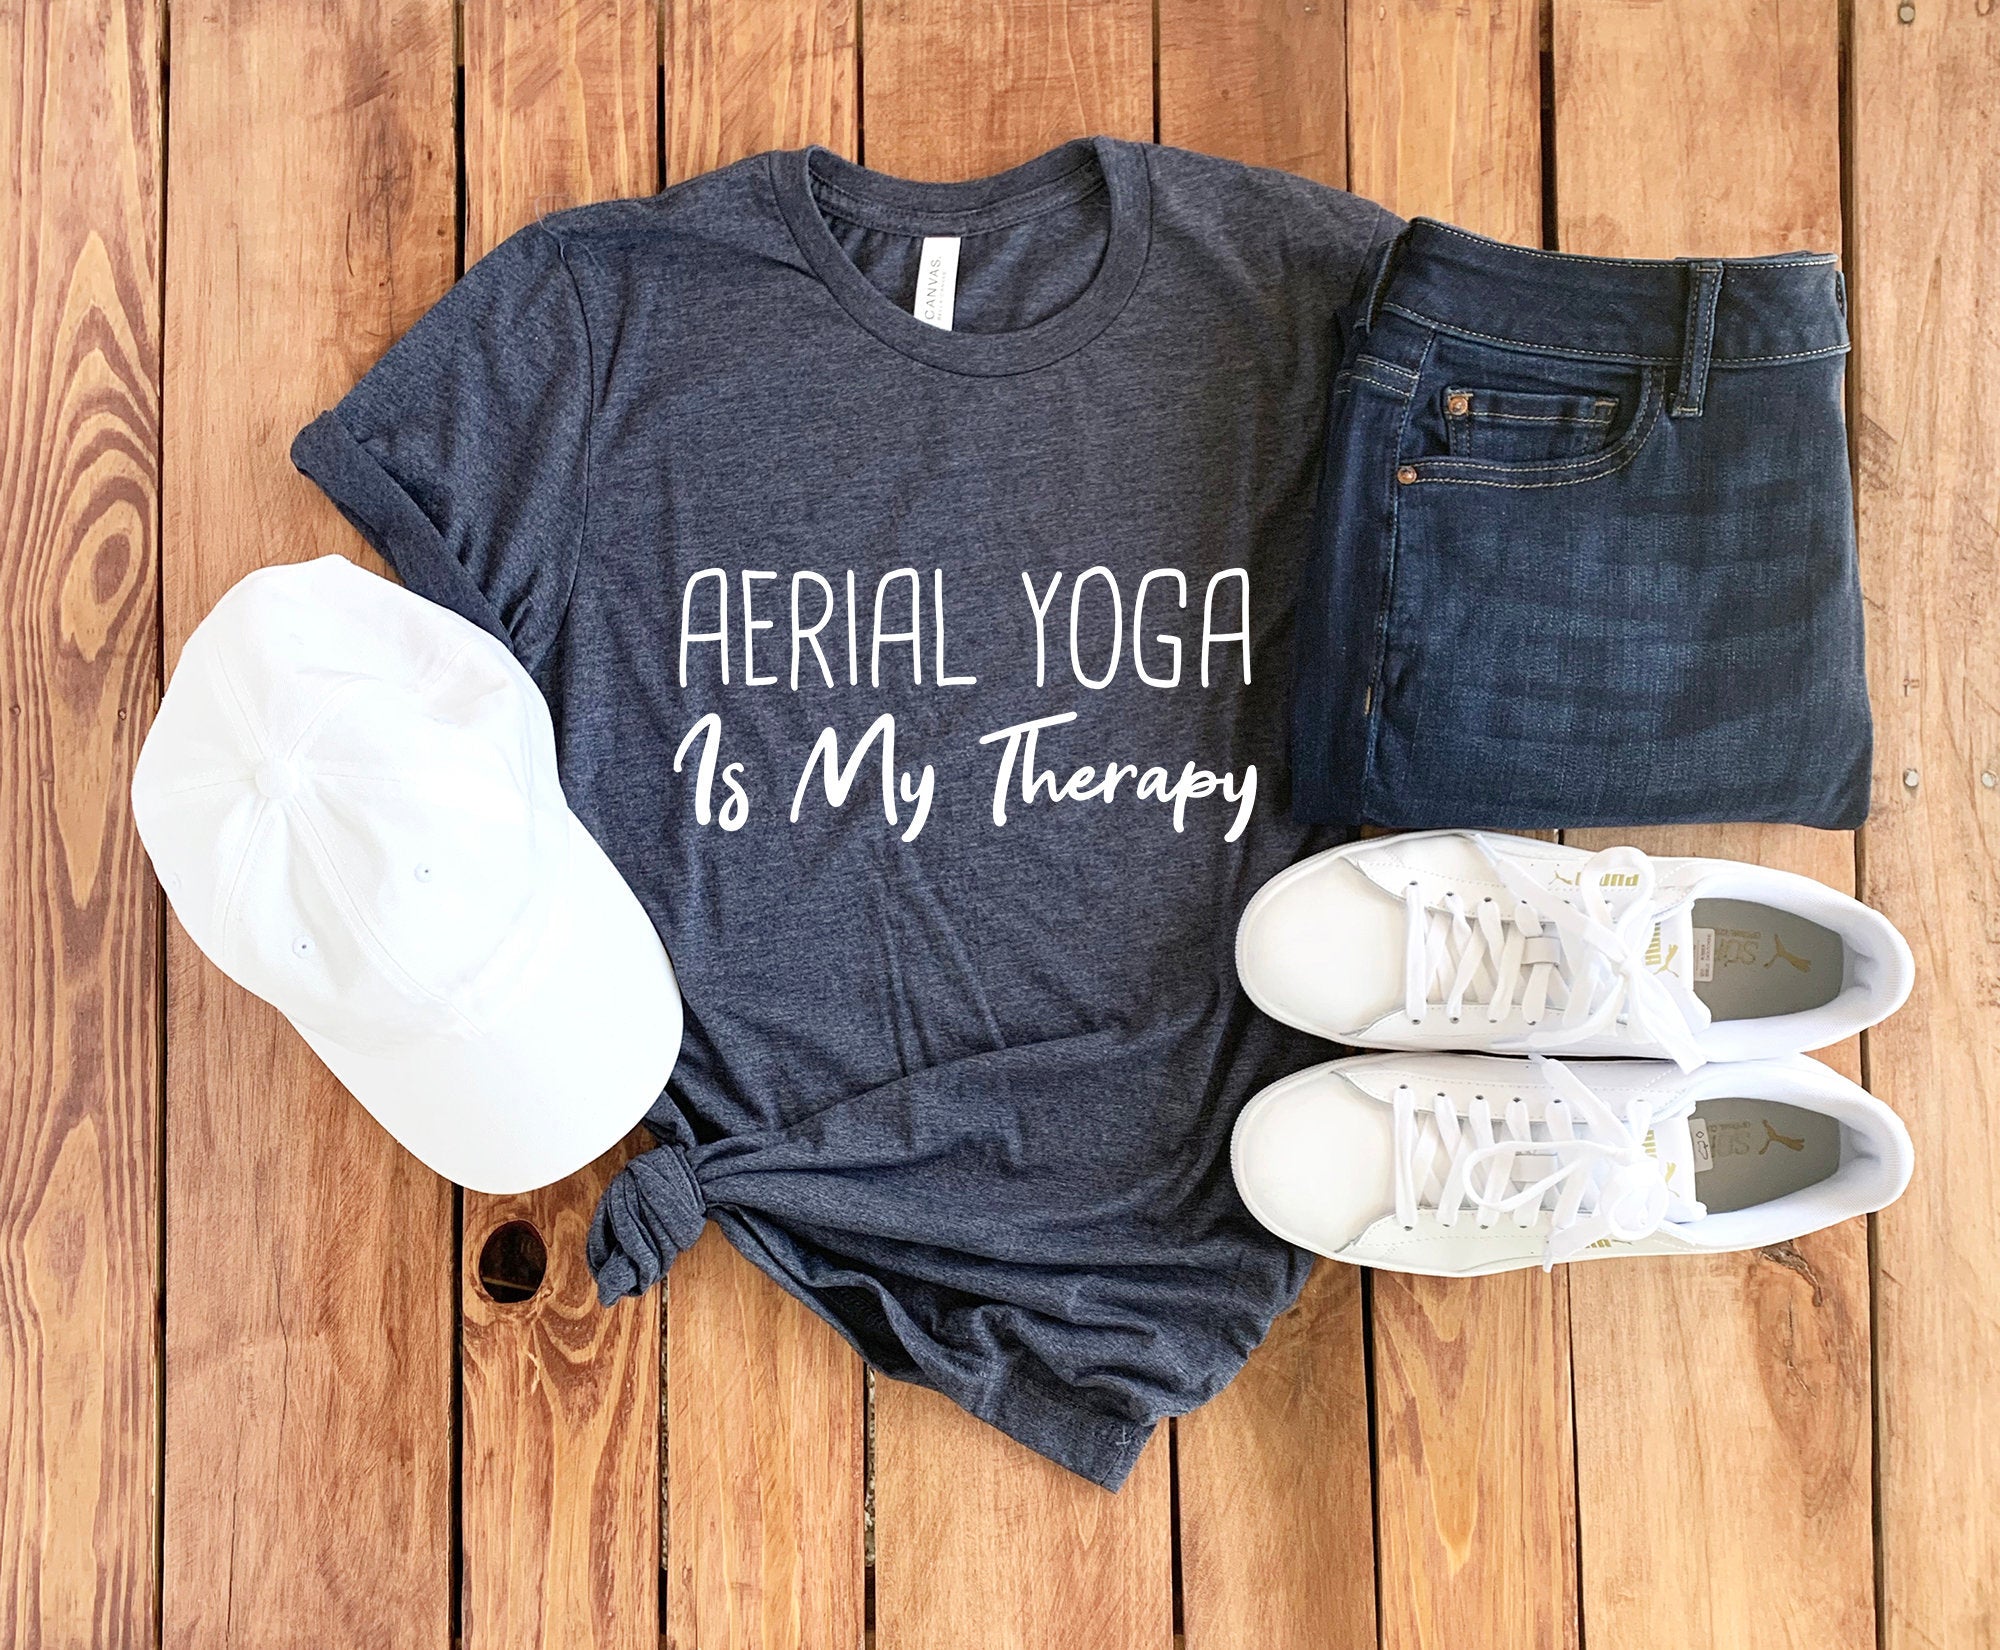 Aerial Yoga Shirts - Aerial Yoga Top - Aerial Yoga T Shirt